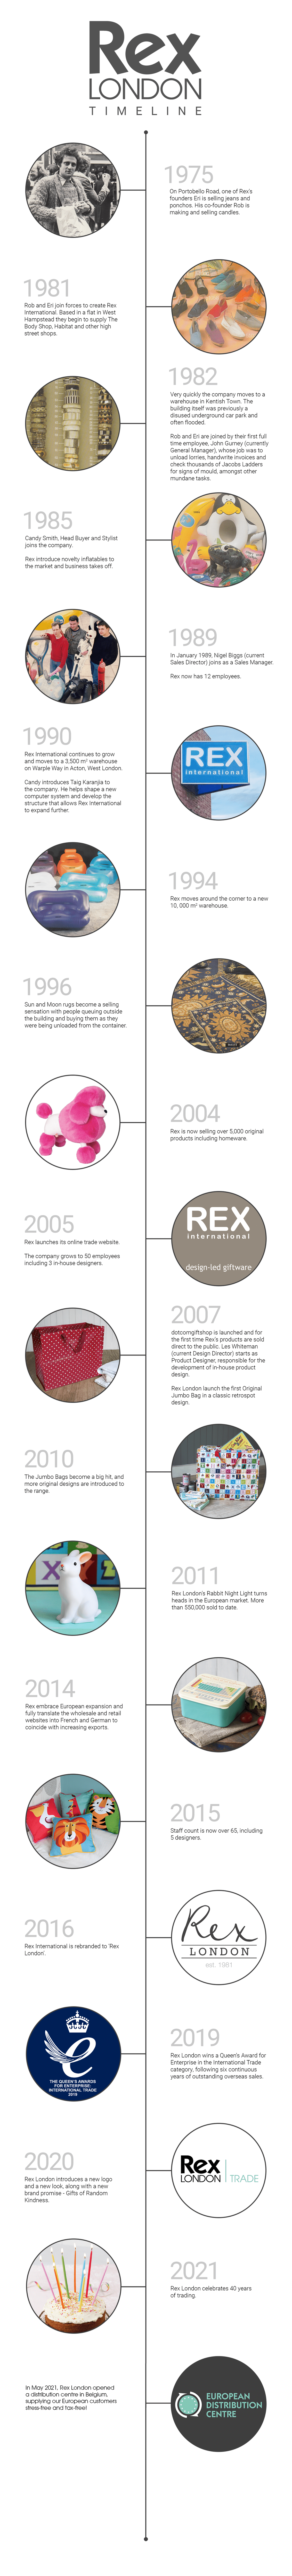 Rex London timeline